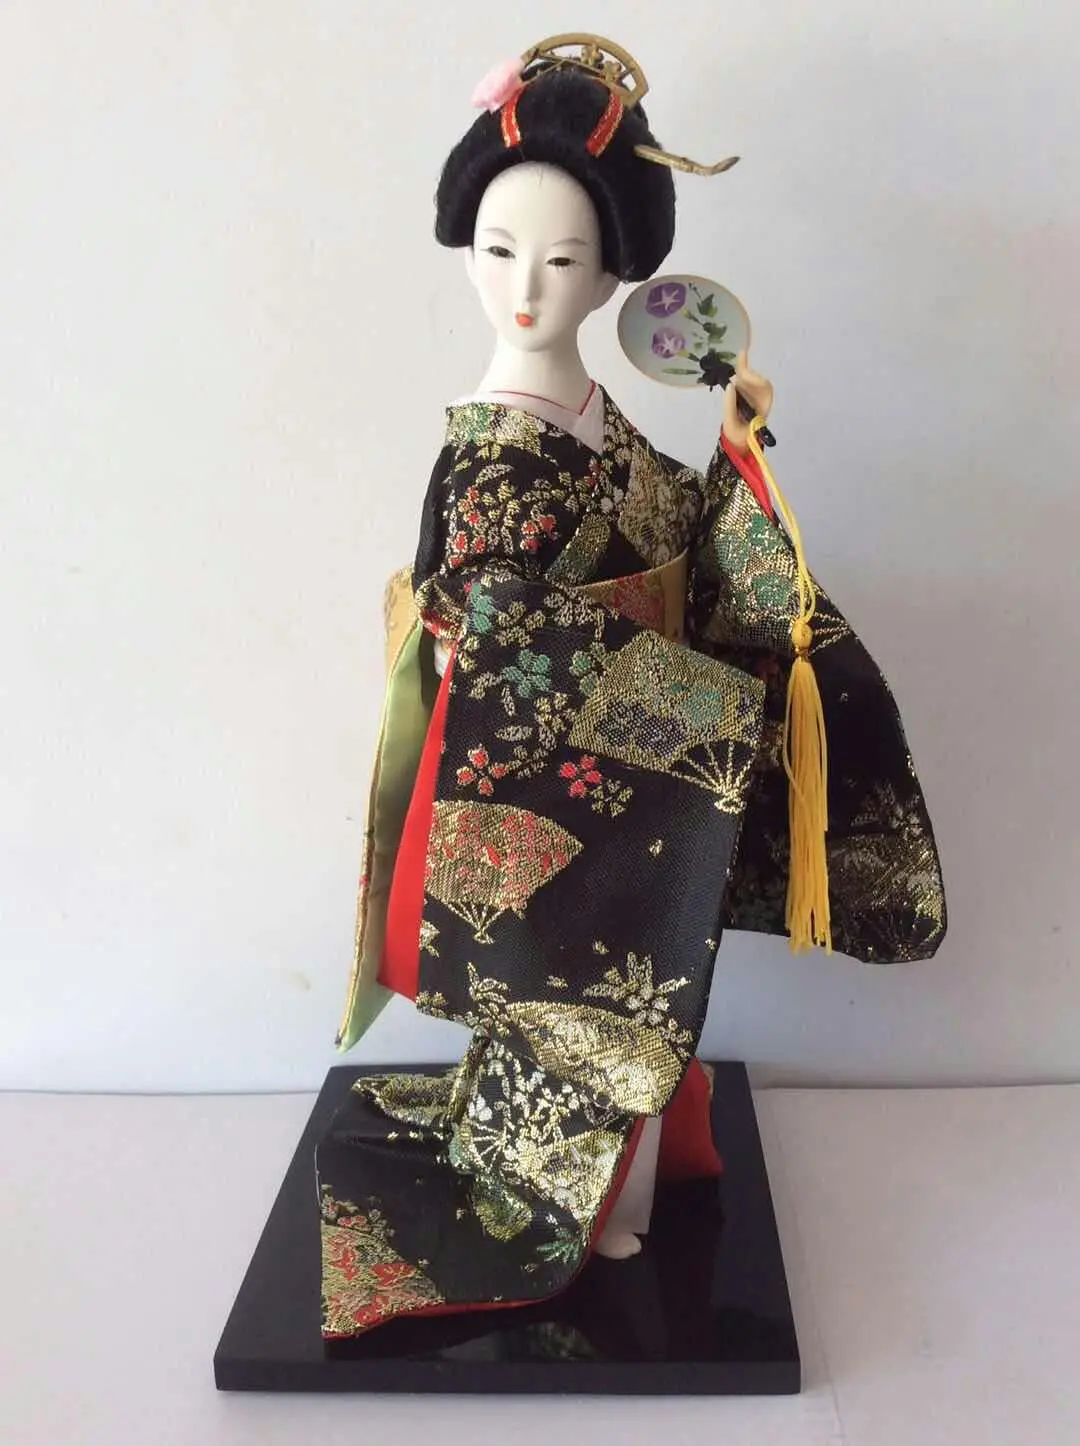 

2019 new Statuette Ethnic Japanese Geisha Dolls Kimono Dolls Belle Girl Lady Collection Home Decoration Miniature Figurines